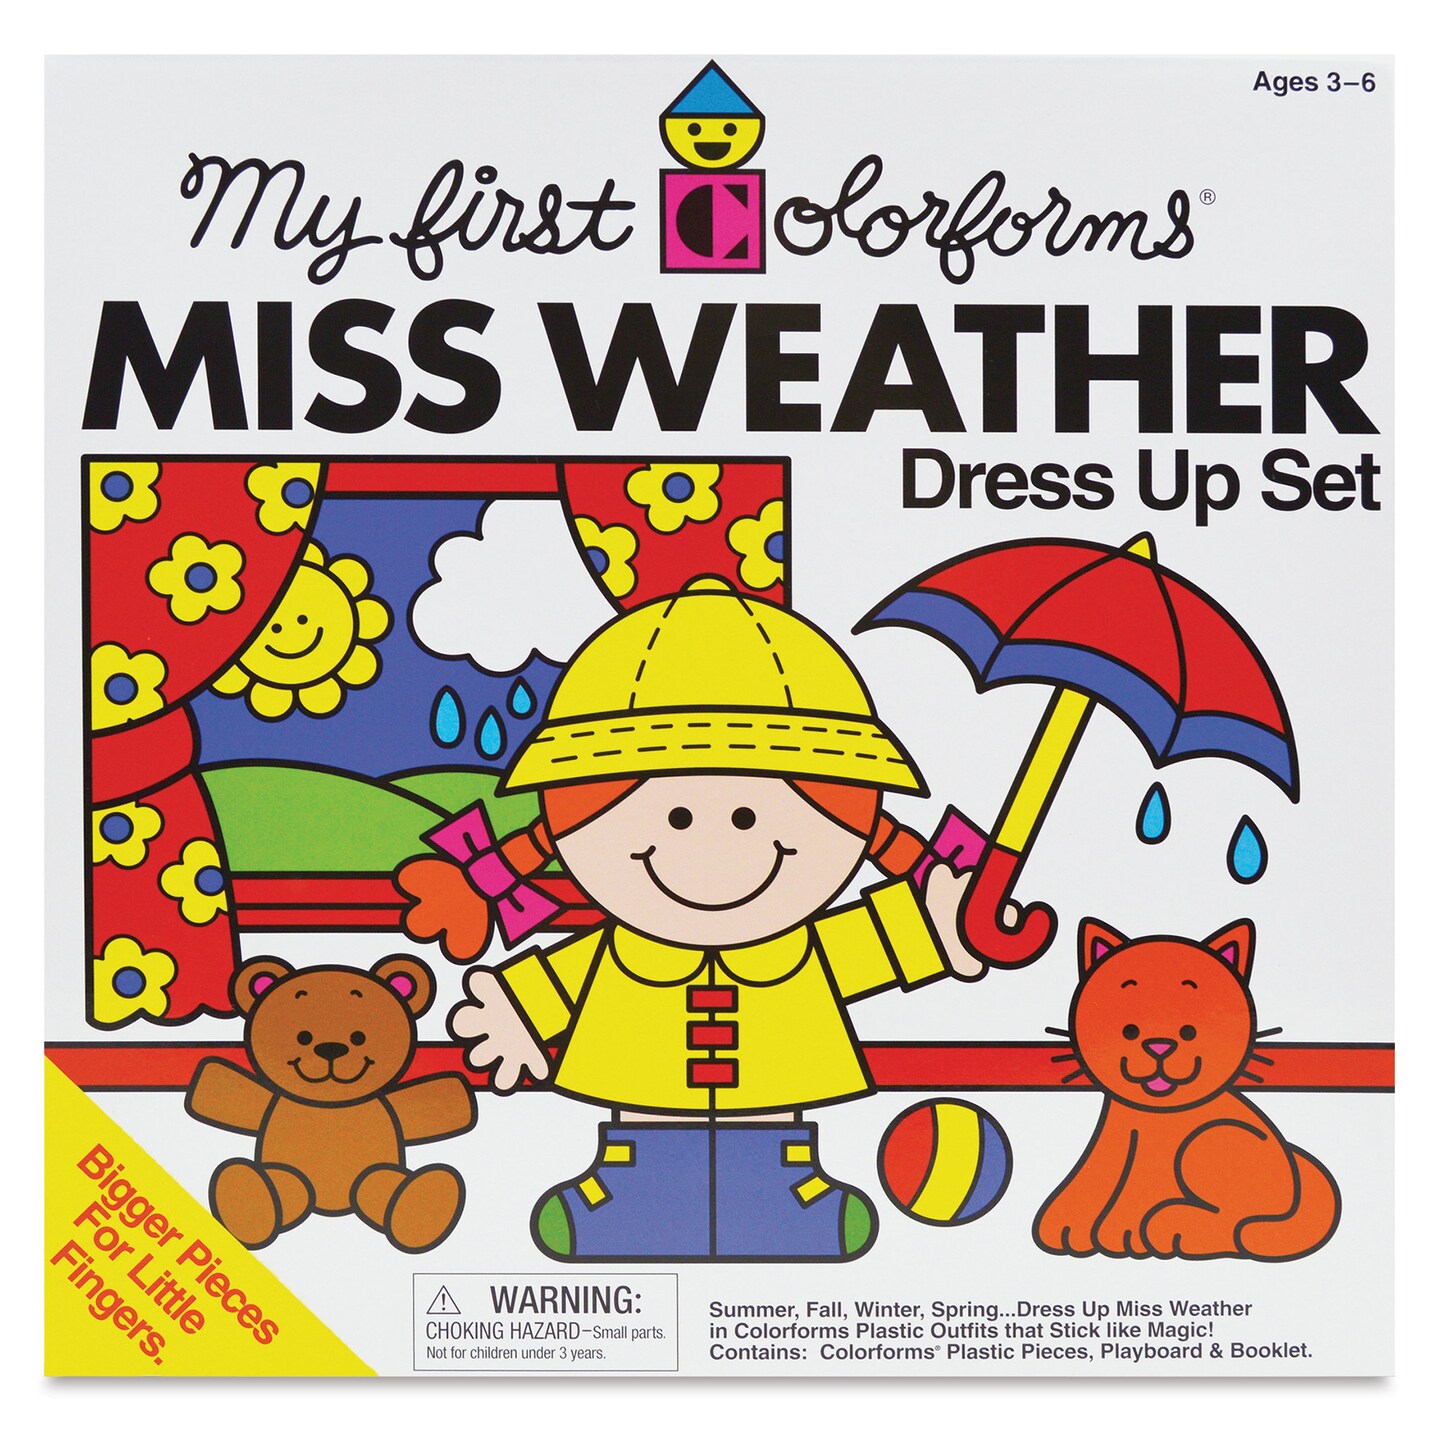 Colorforms Cling Vinyl Play Set - Retro Miss Weather